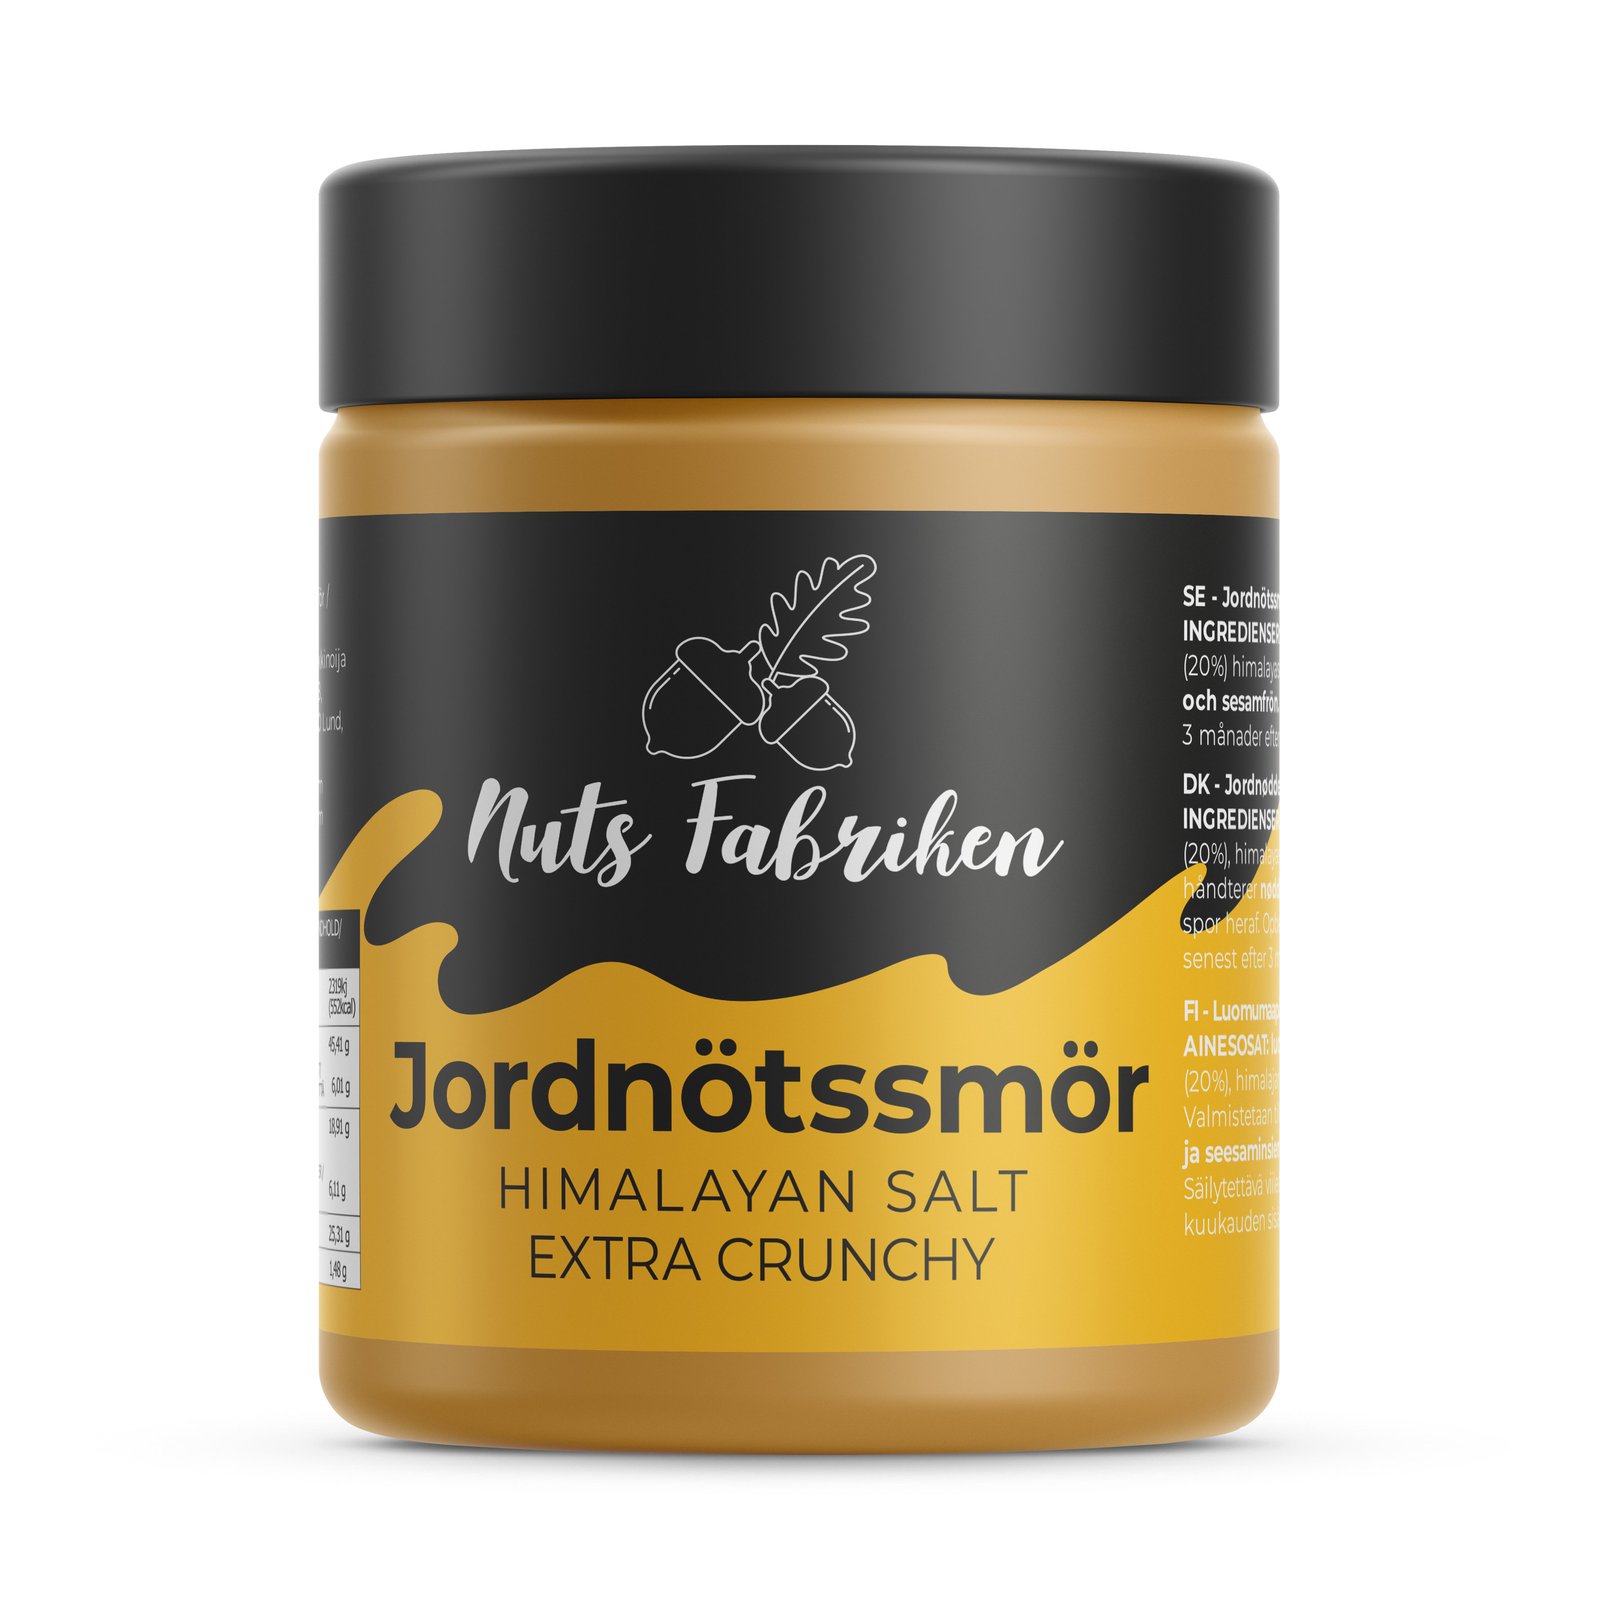 Nuts Fabriken Jordnötssmör Himalayan Salt Extra Crunchy  1kg